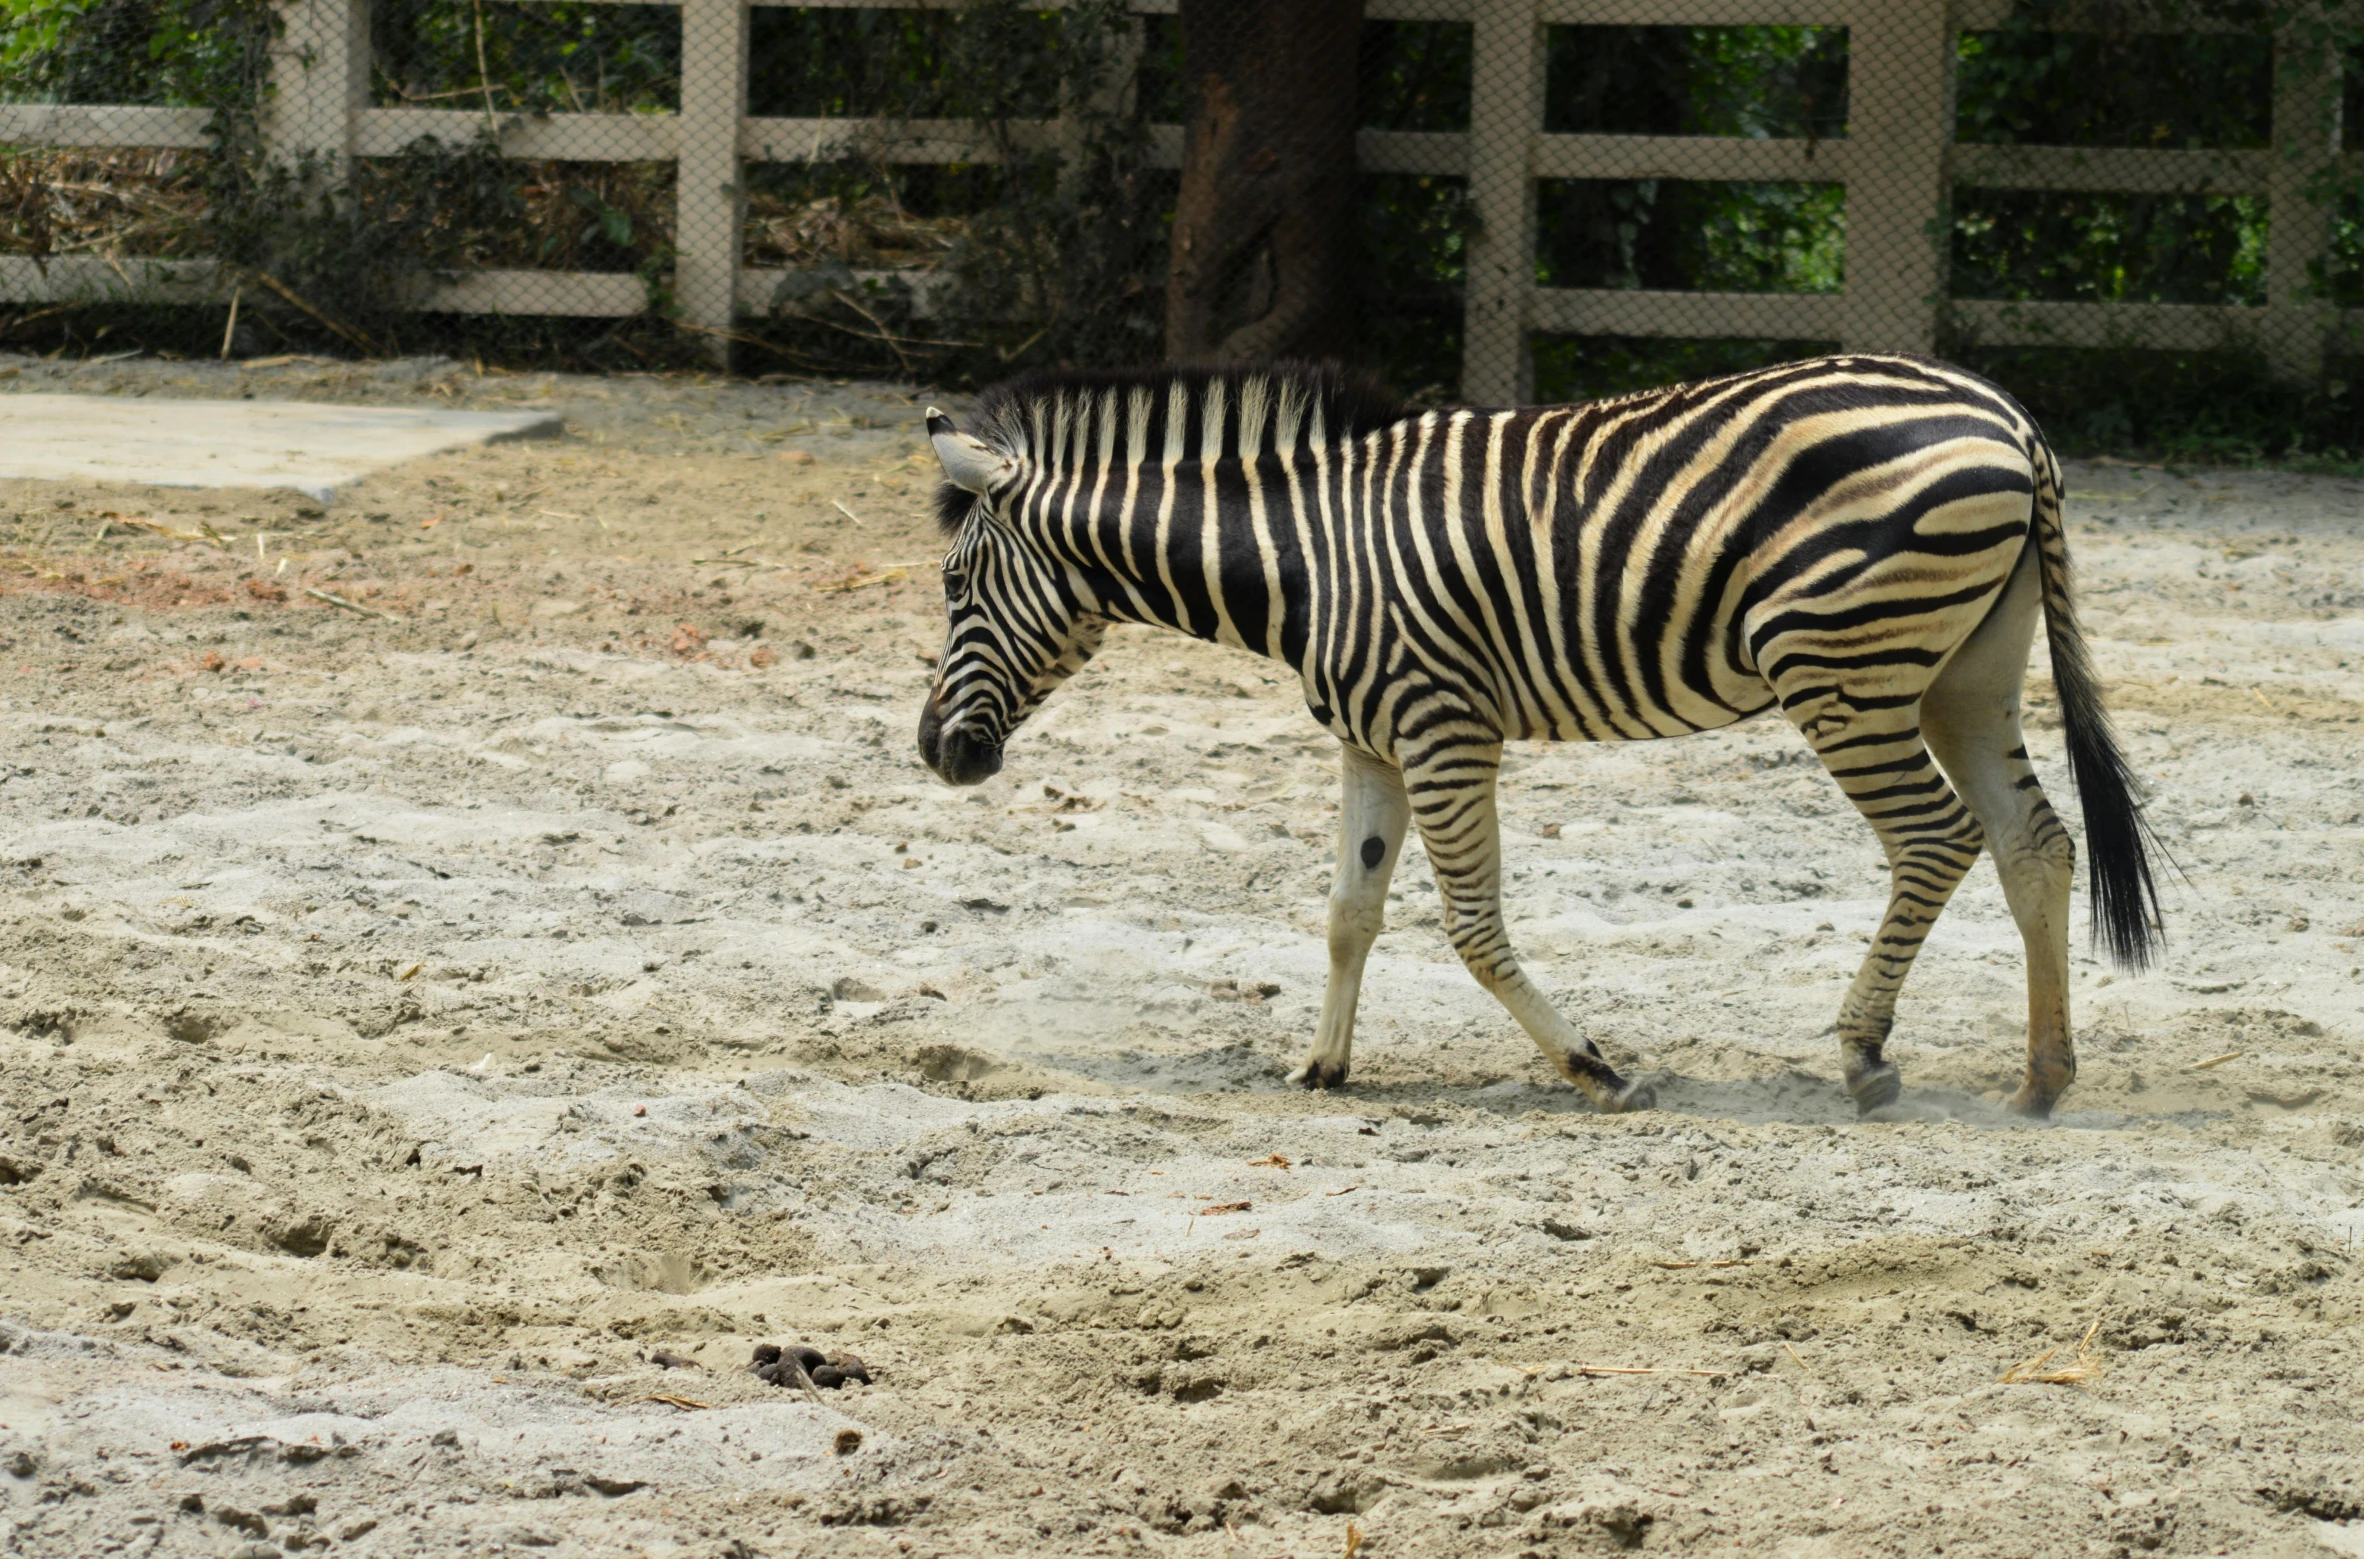 a zebra walking across a dirt field next to a fence, kuala lumpur, white stripes all over its body, dreamworld, a wooden